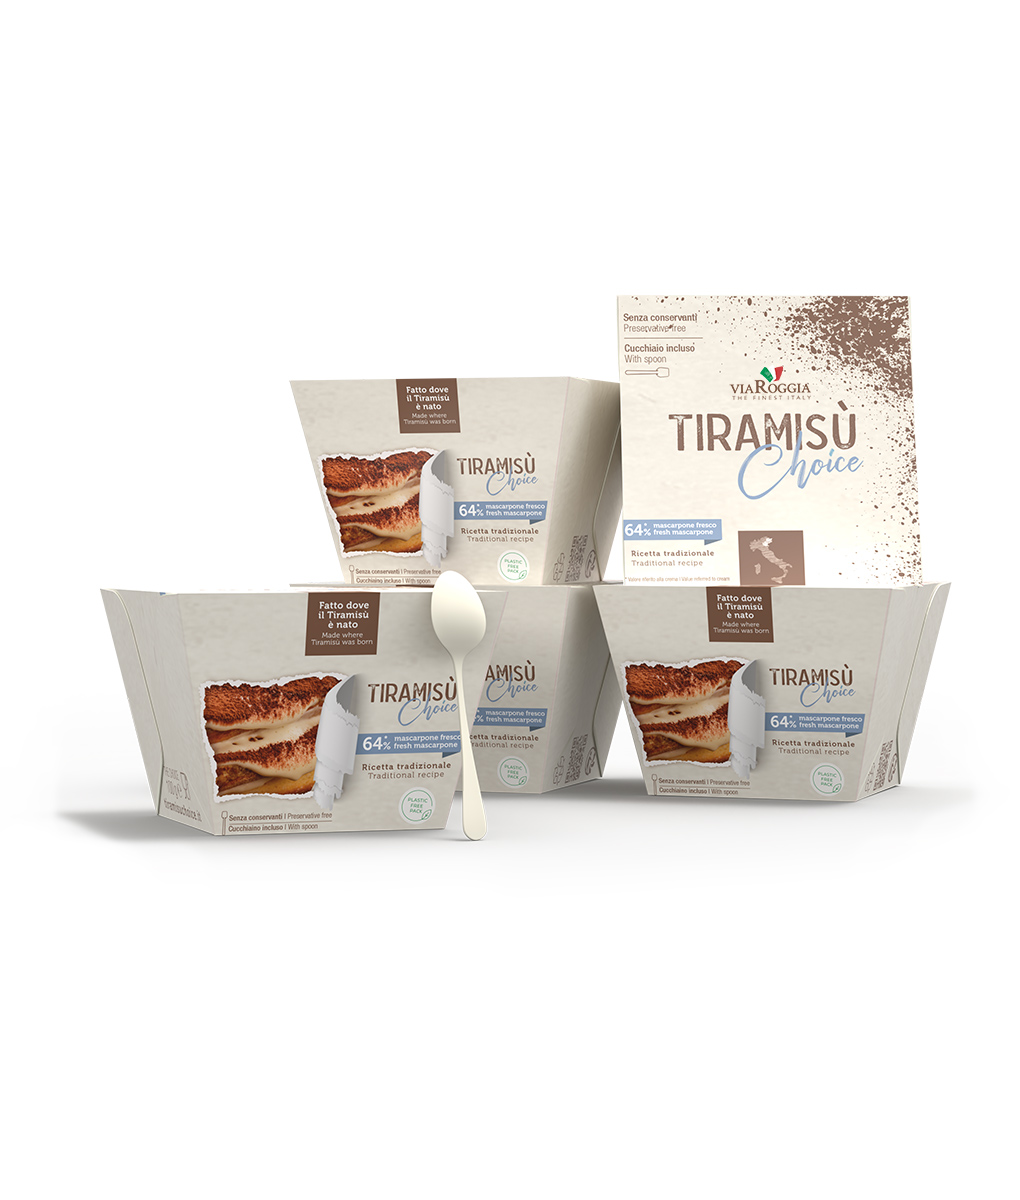 Italian Frozen Tiramisu - THE CHOICE WITH SPOON